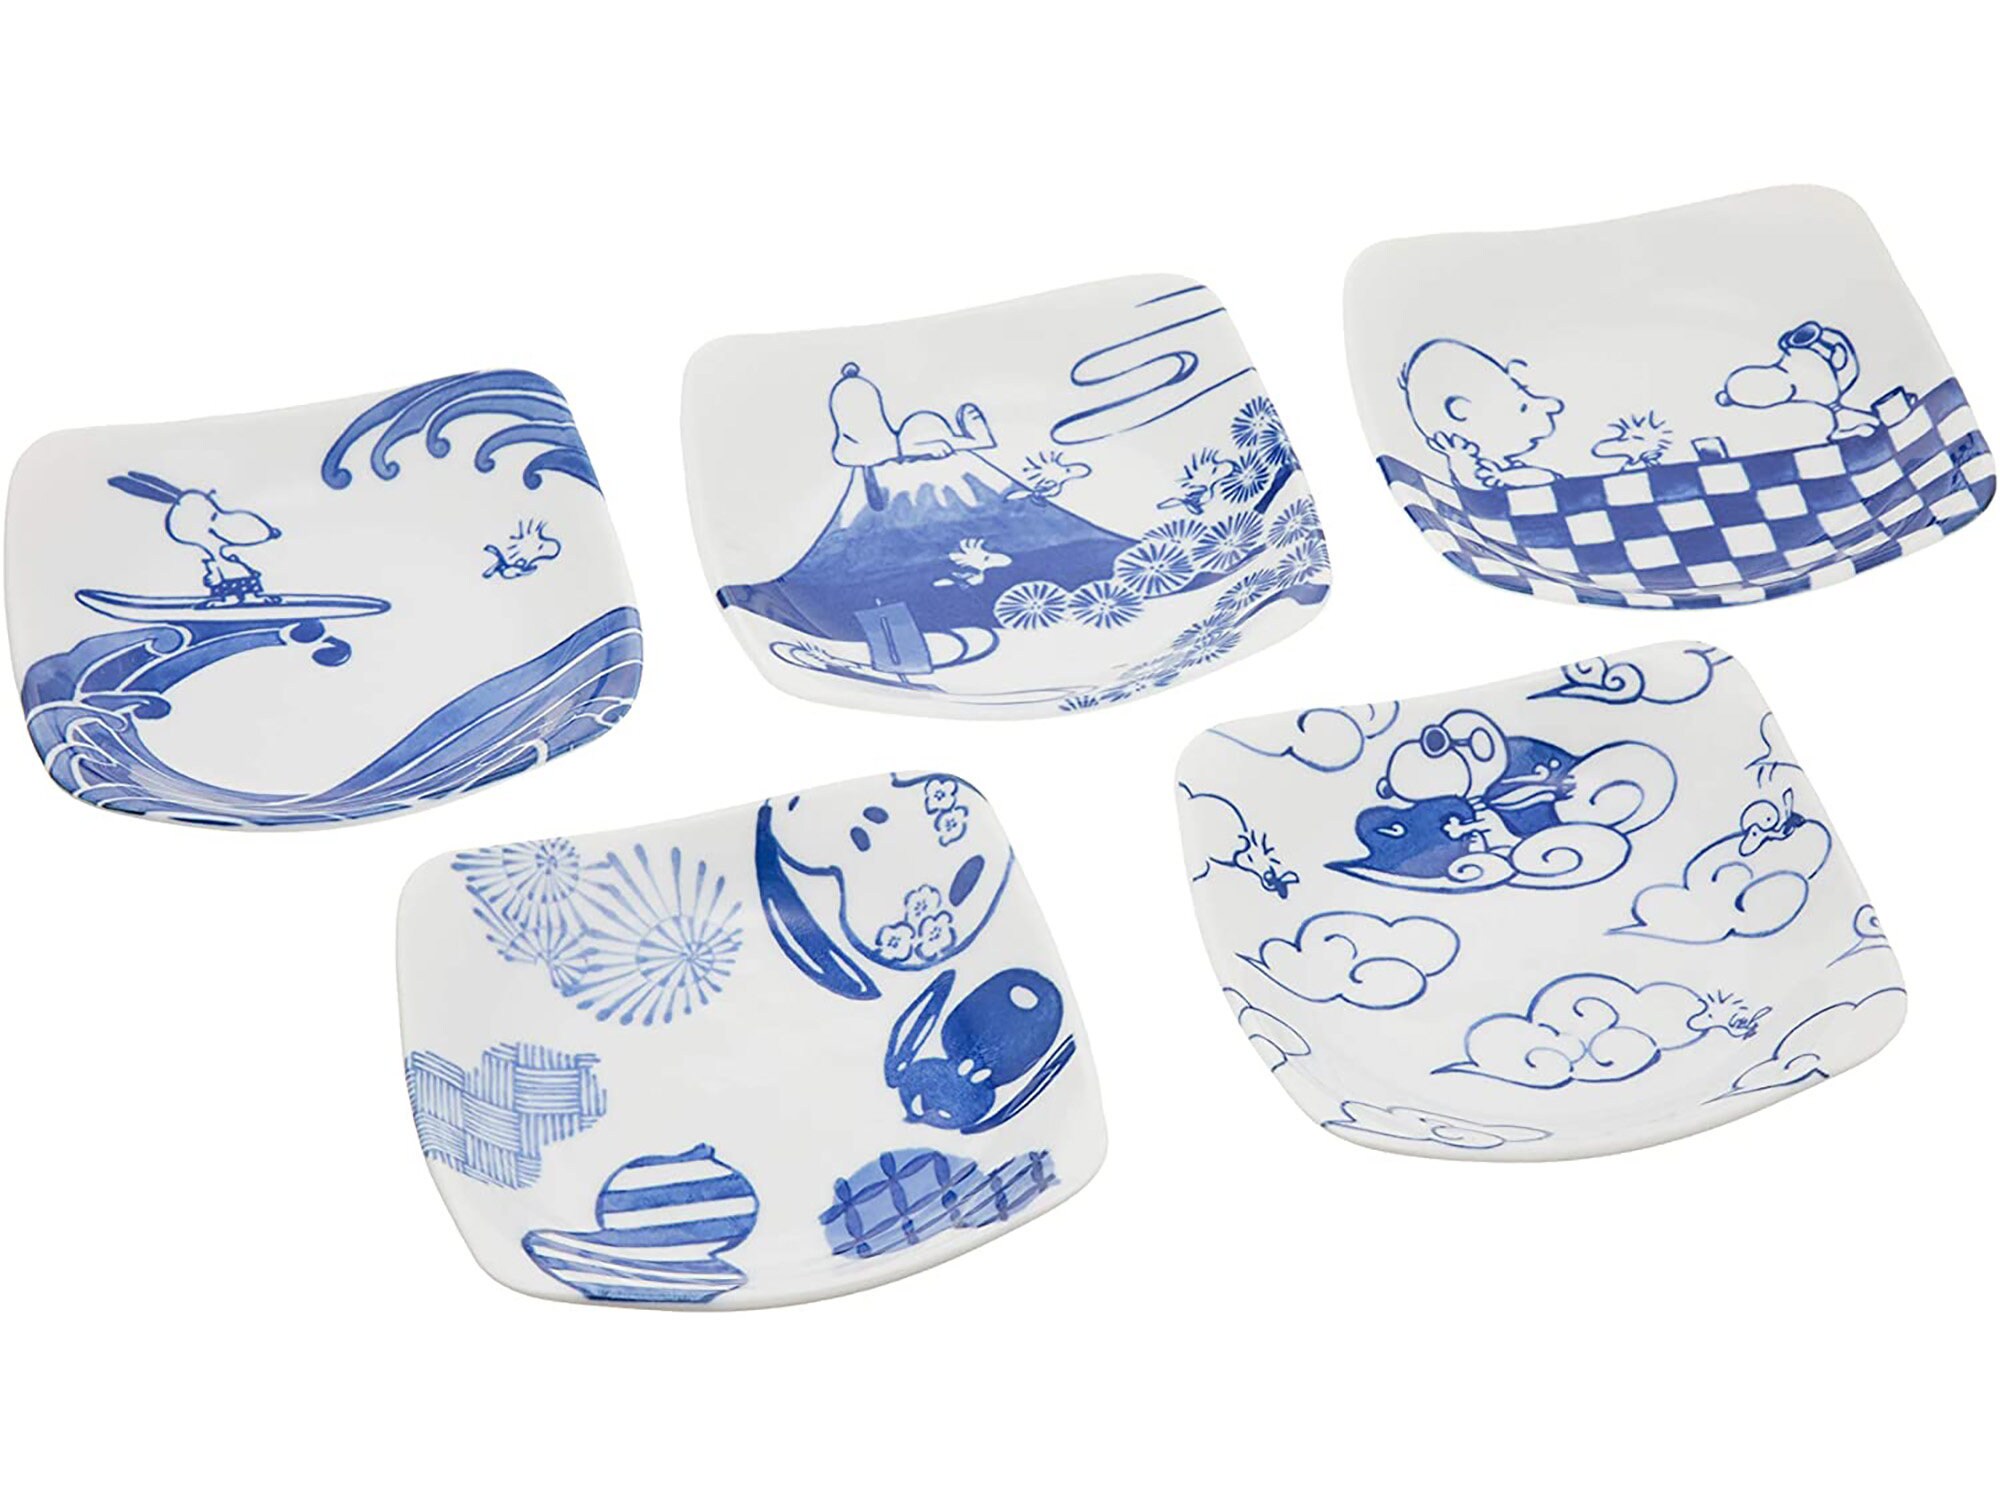 Details about   Peanuts Snoopy Sometsuke Blue & white Arabesque Soup Bowl Rice Bowl Mug Set of 3 